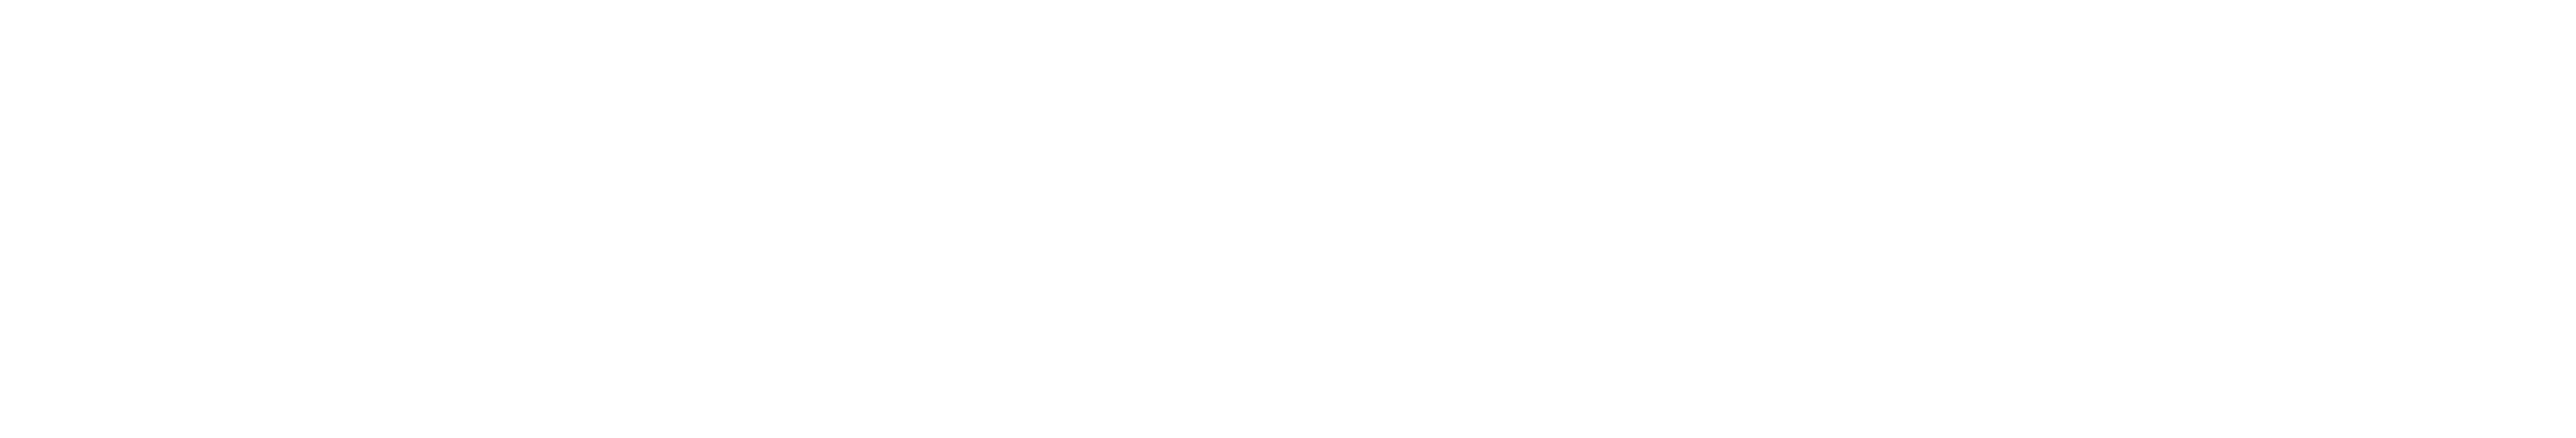 Morristown Jewish Center Logo